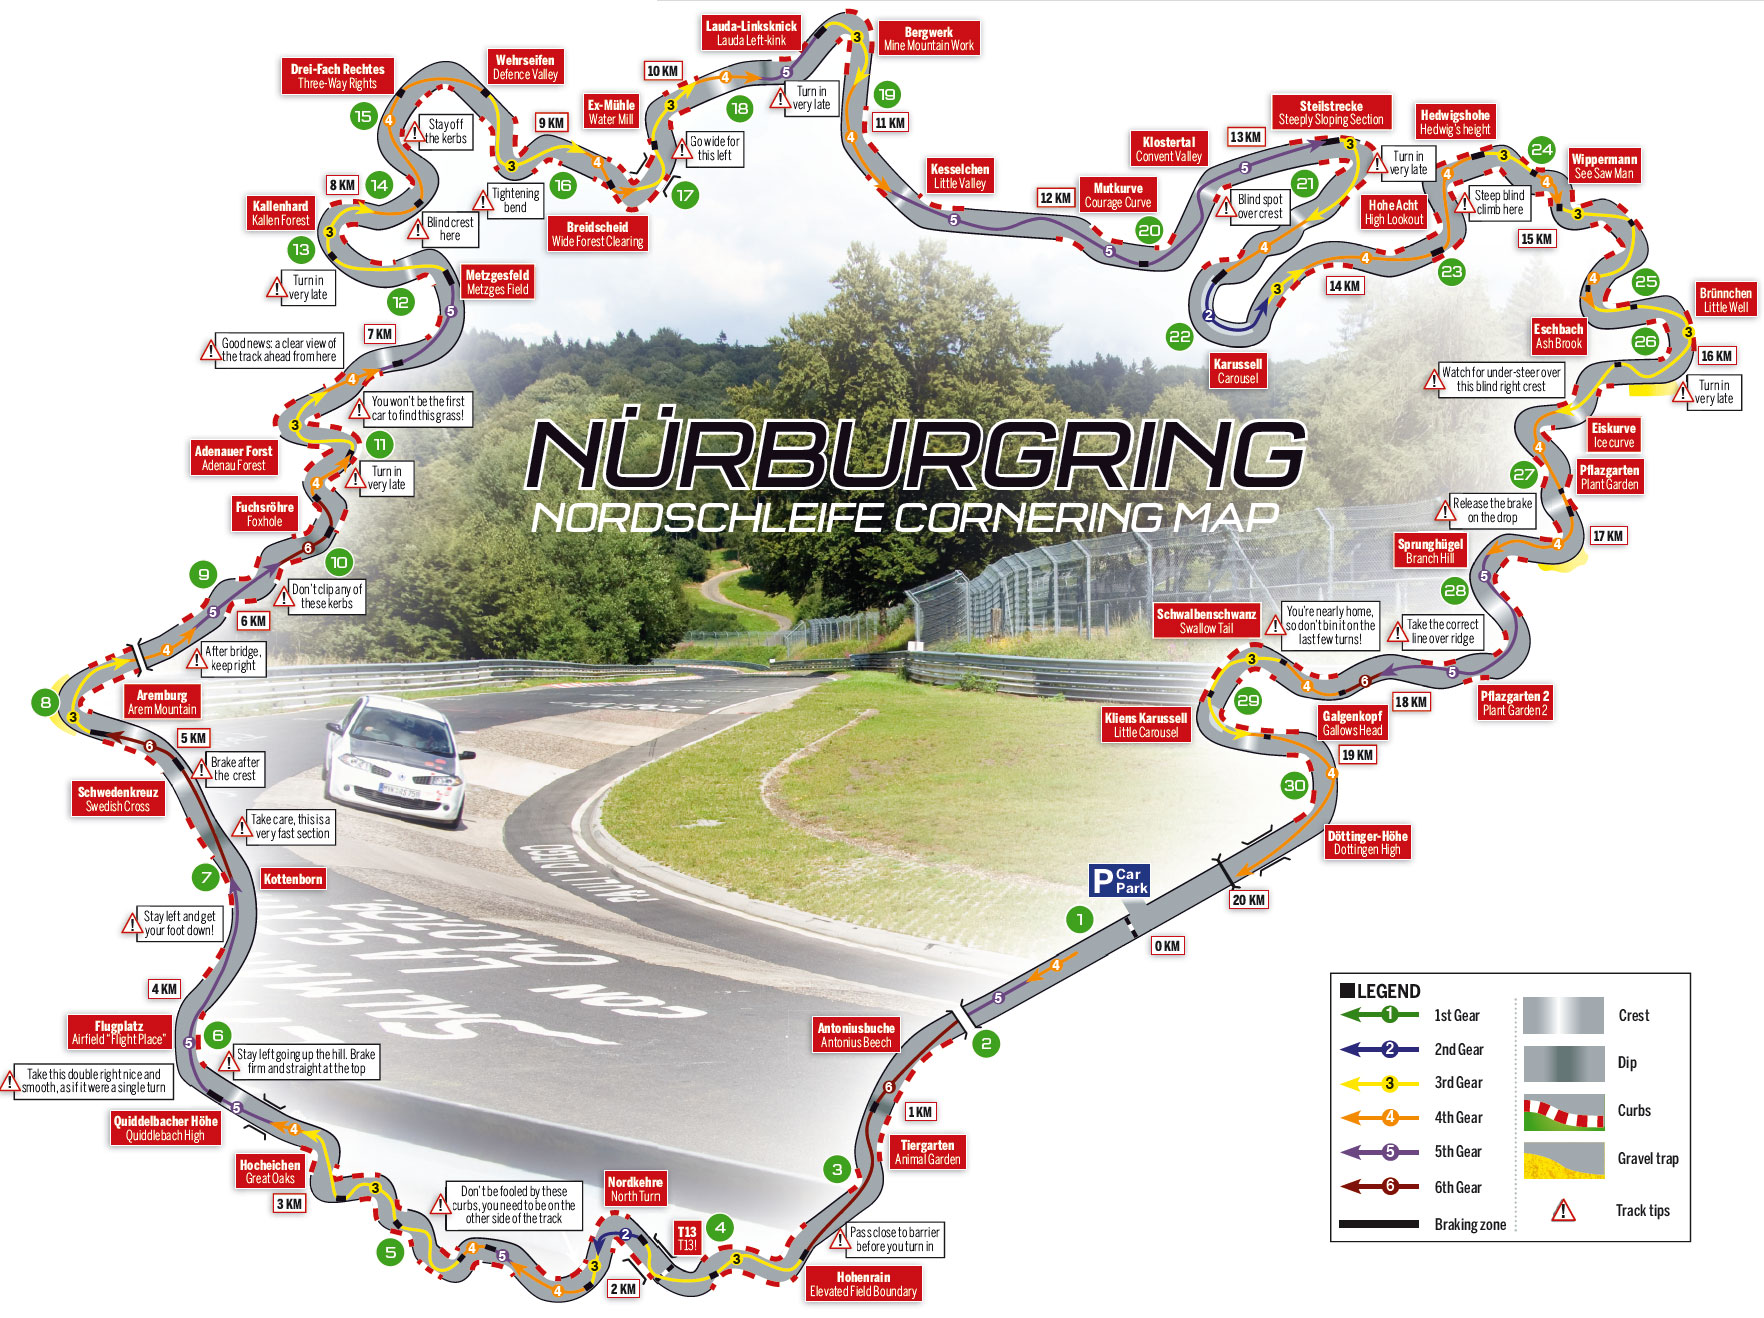 nurburgring nordschleife cornering map guide download